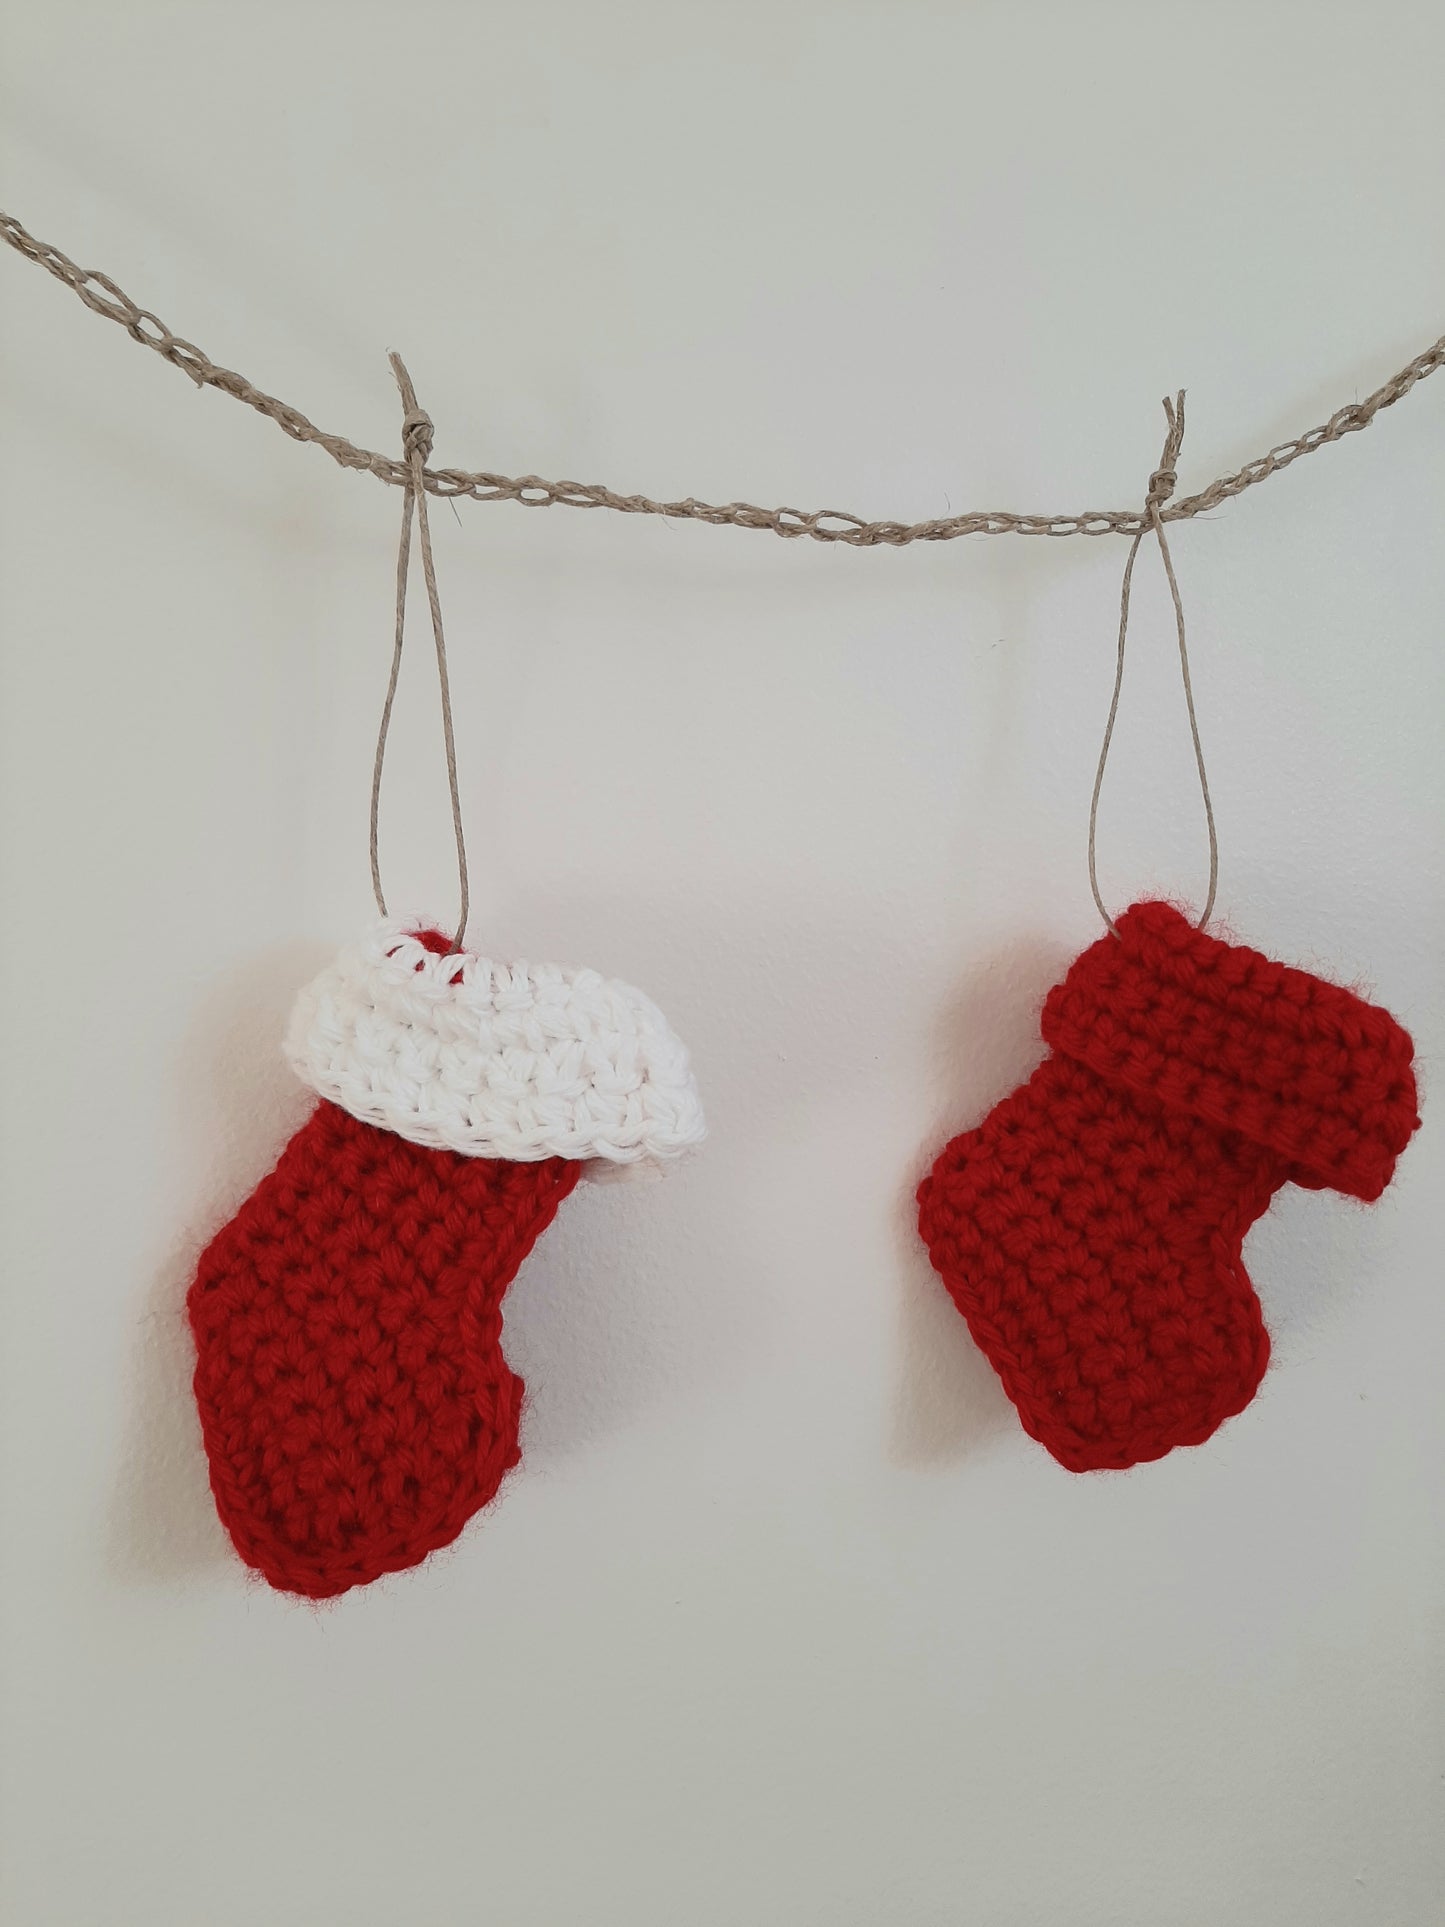 Mini Crochet Christmas Stockings - Christmas Home  Decoration